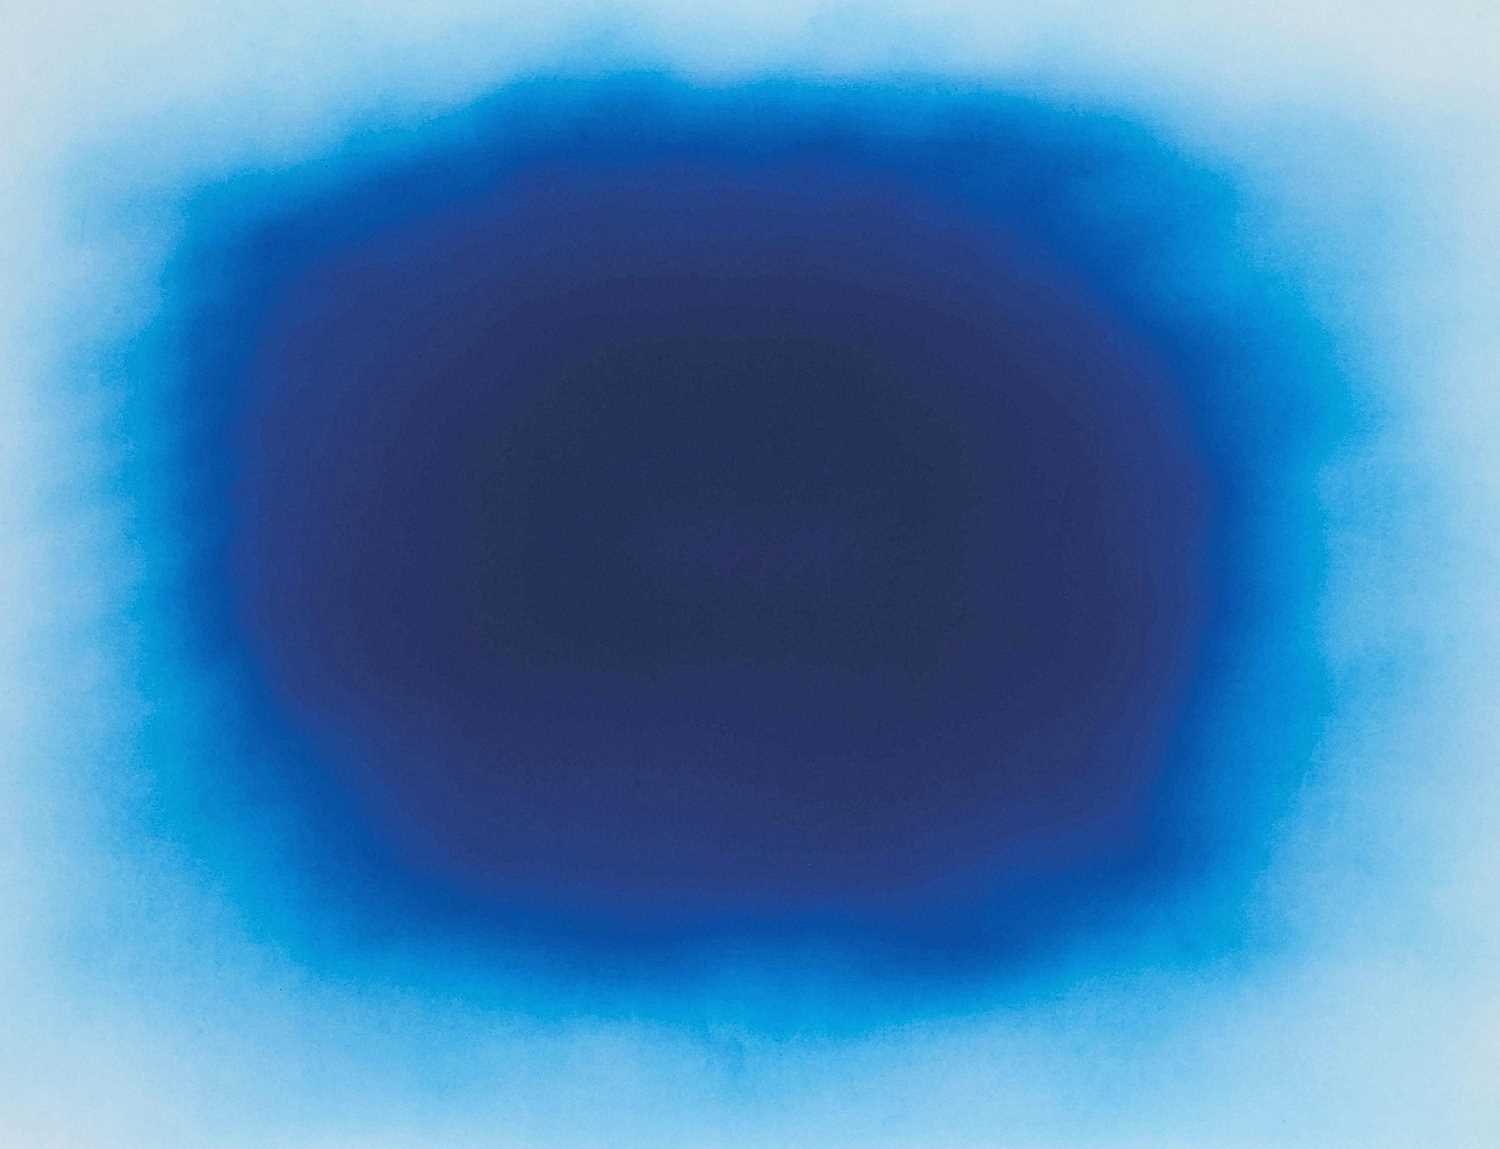 Lot 9 - Anish Kapoor (British 1954-), 'Breathing Blue', 2020